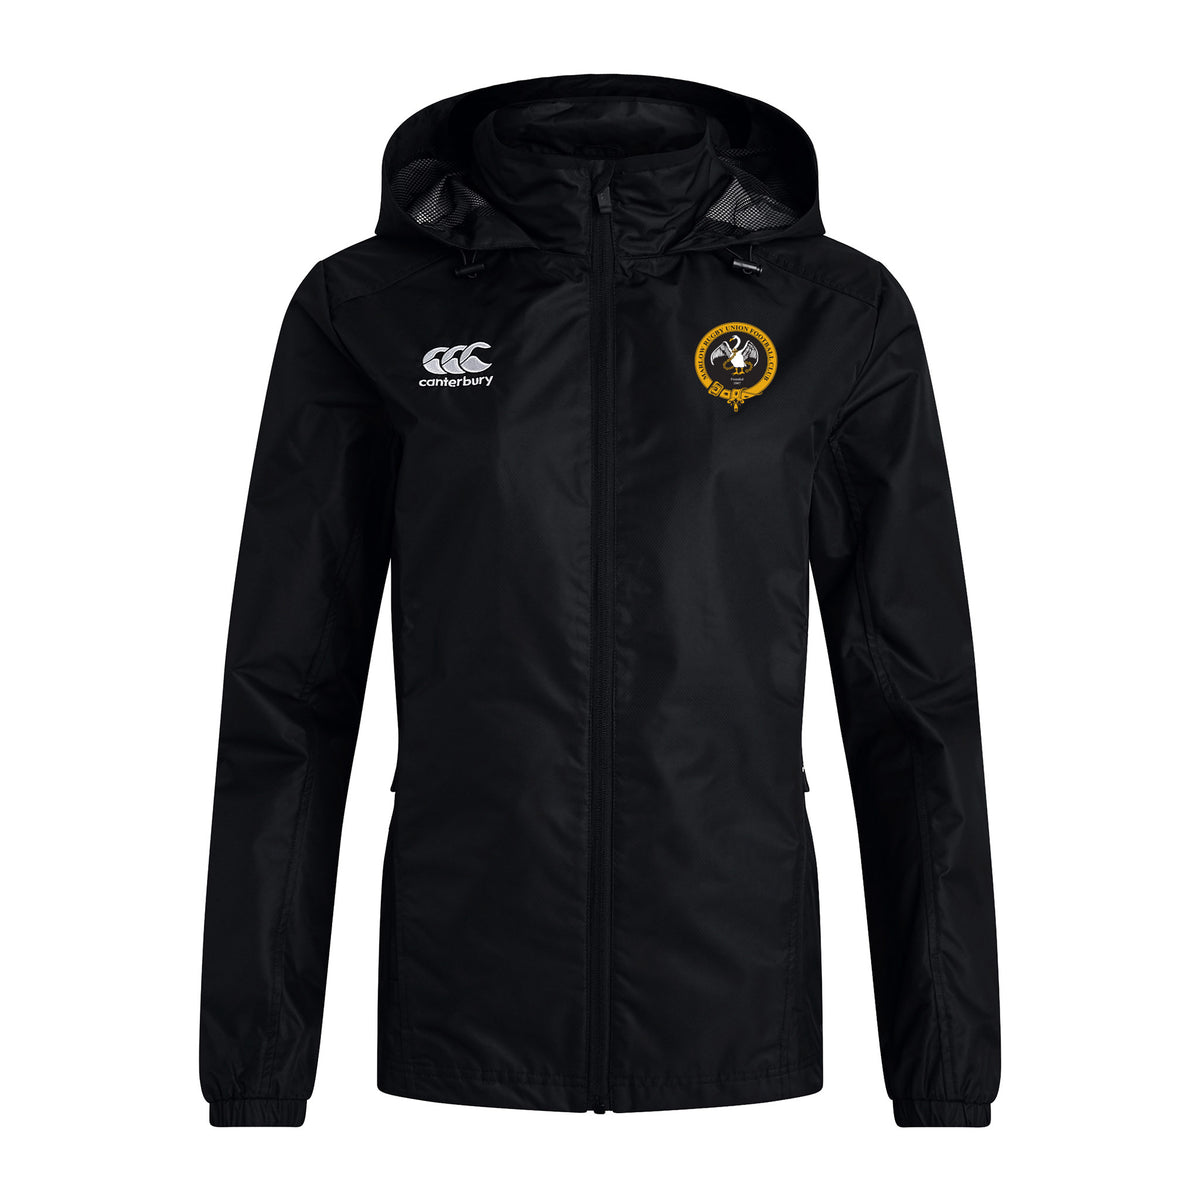 Marlow RFC Women's Club Vaposhield Full Zip Jacket